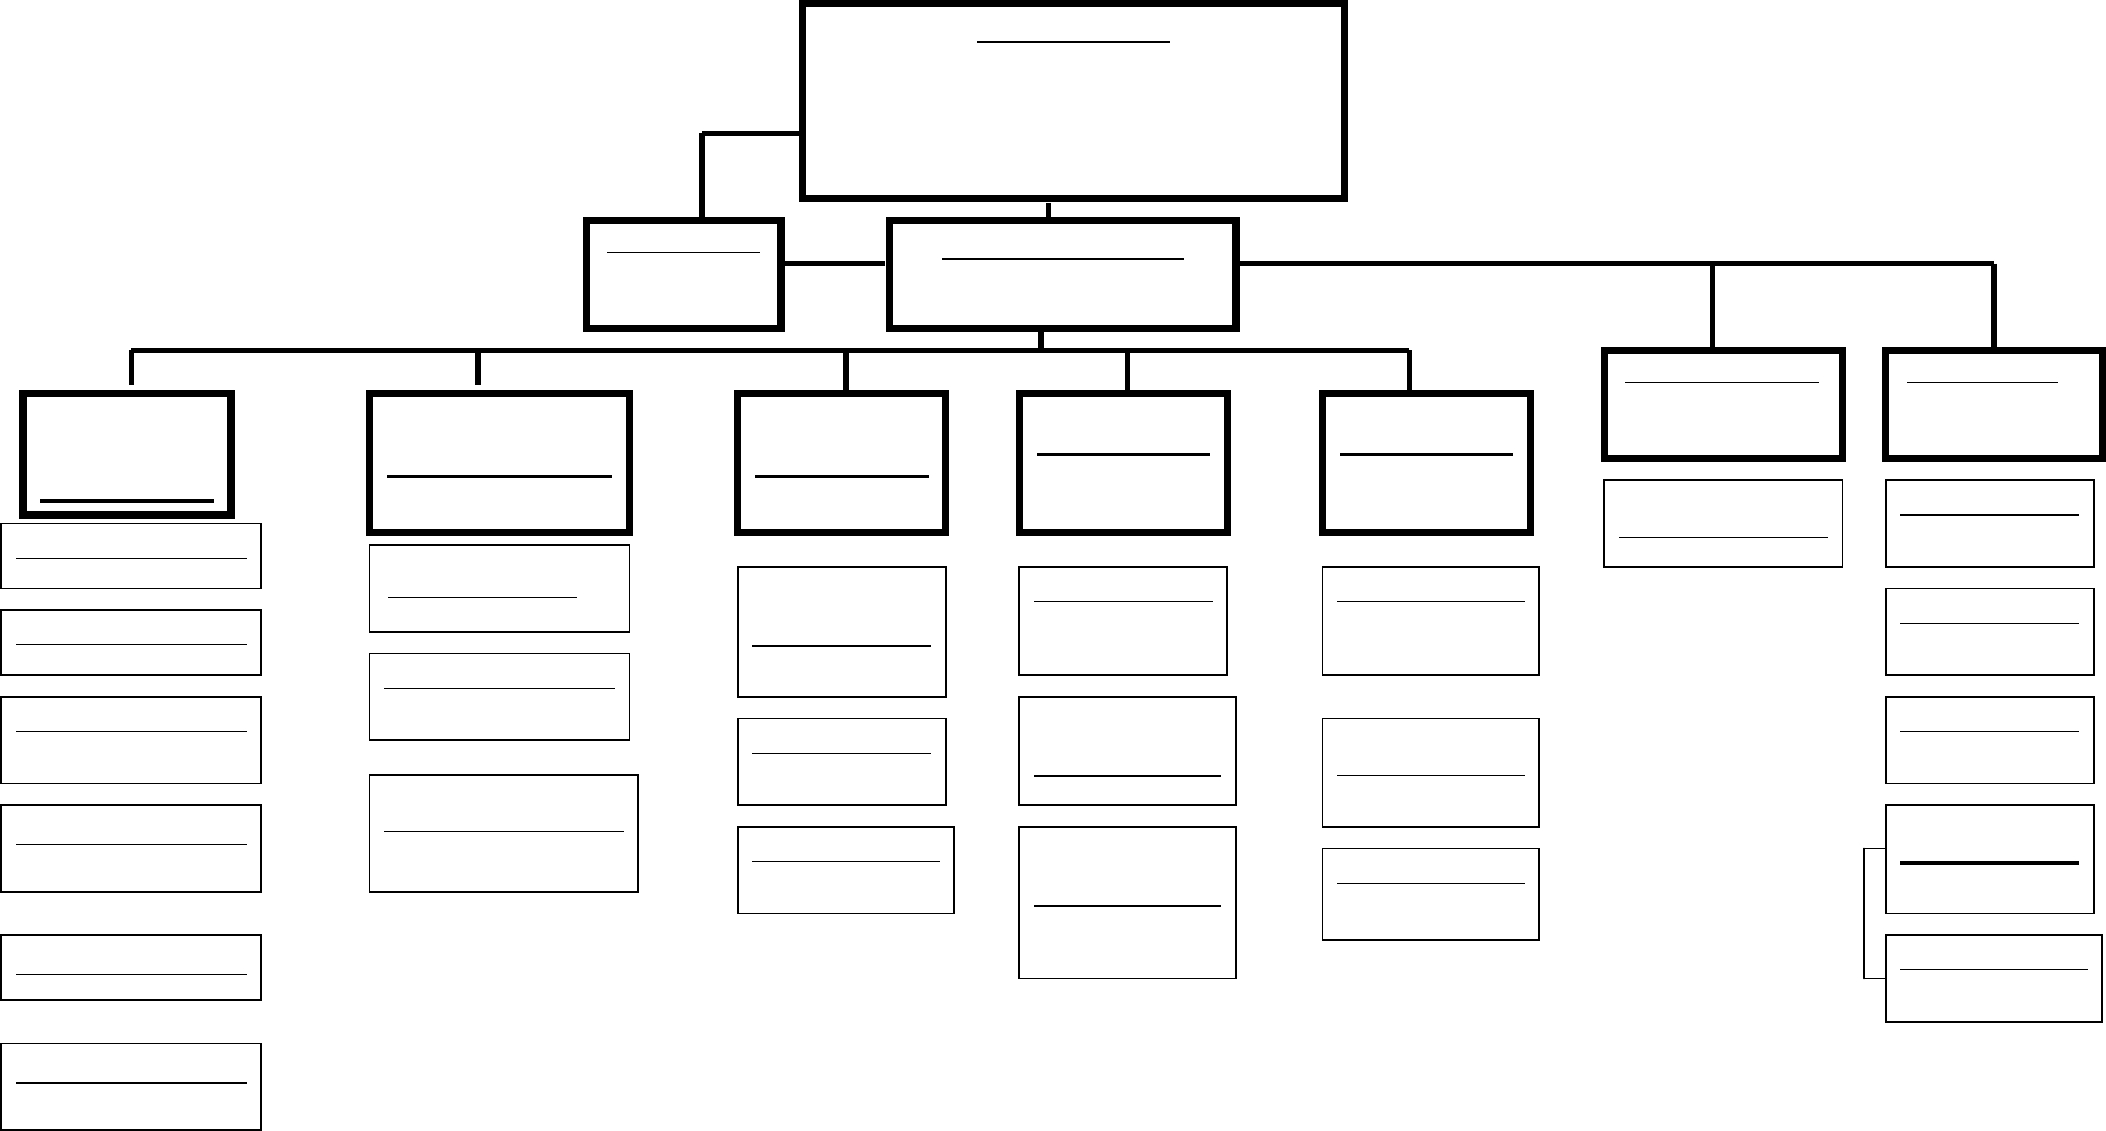 Blank Organizational Chart - Cumberland College Free Download With Regard To Free Blank Organizational Chart Template